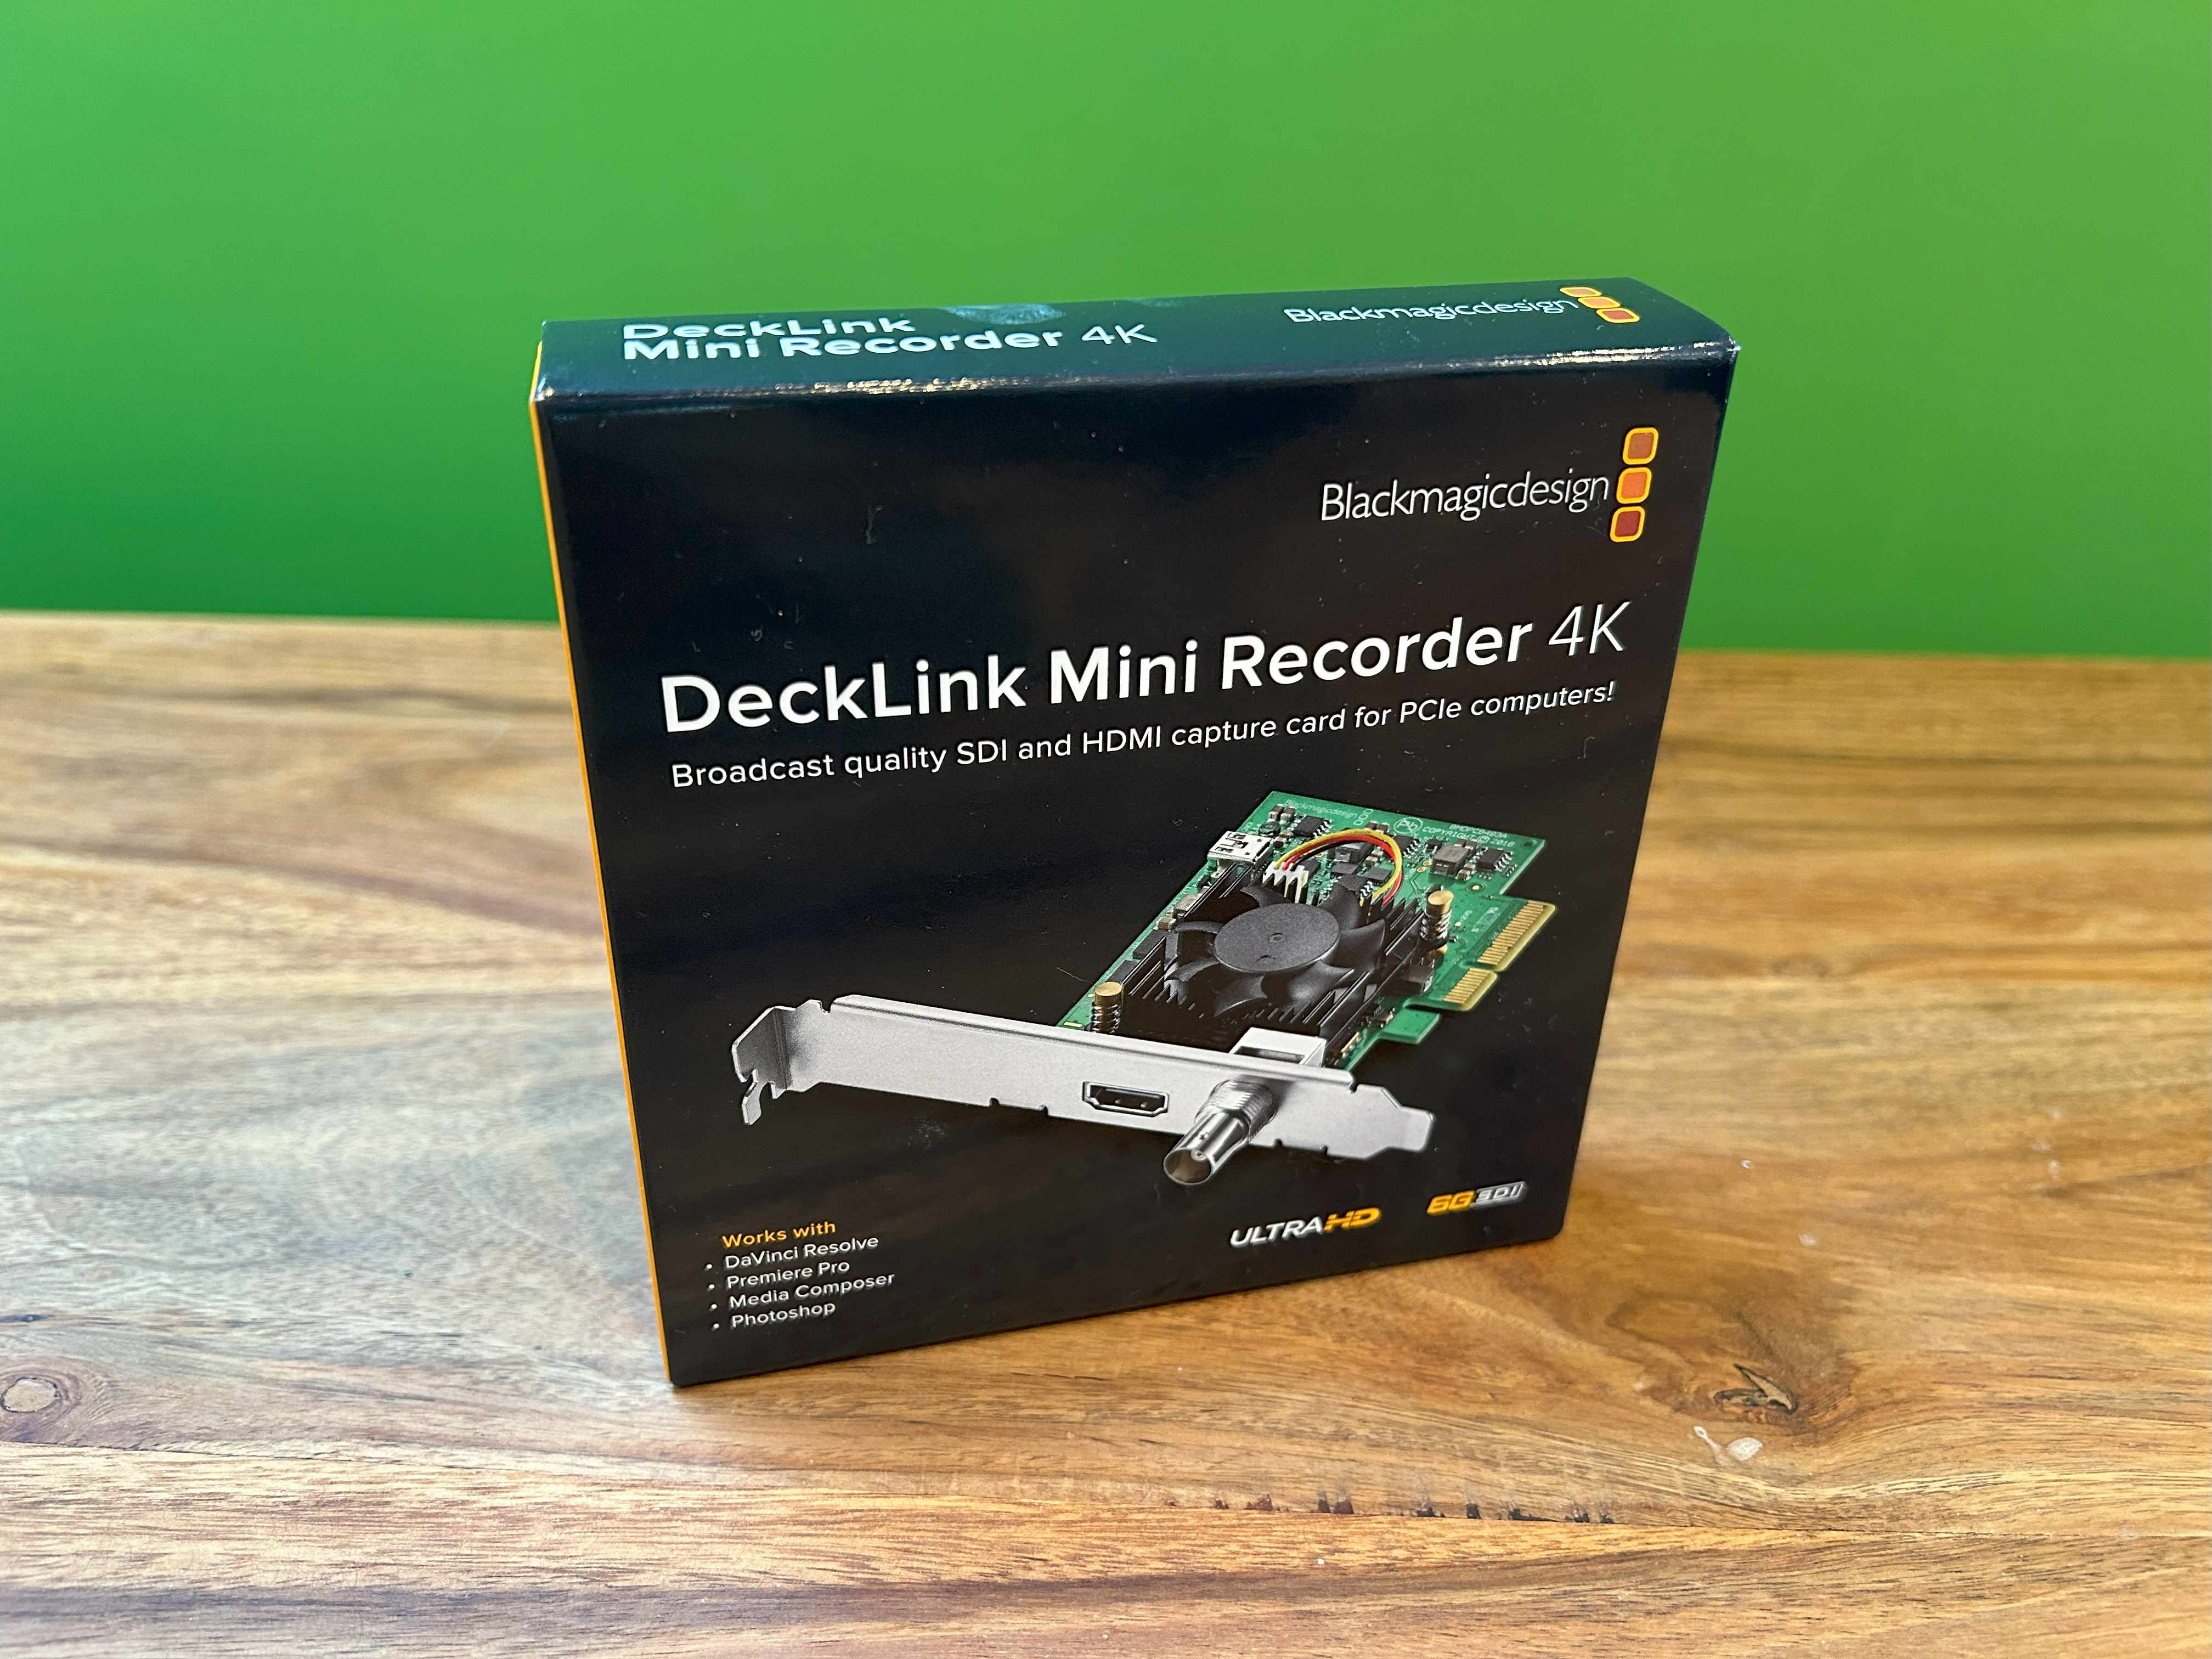 The DeckLink Mini Recorder 4K